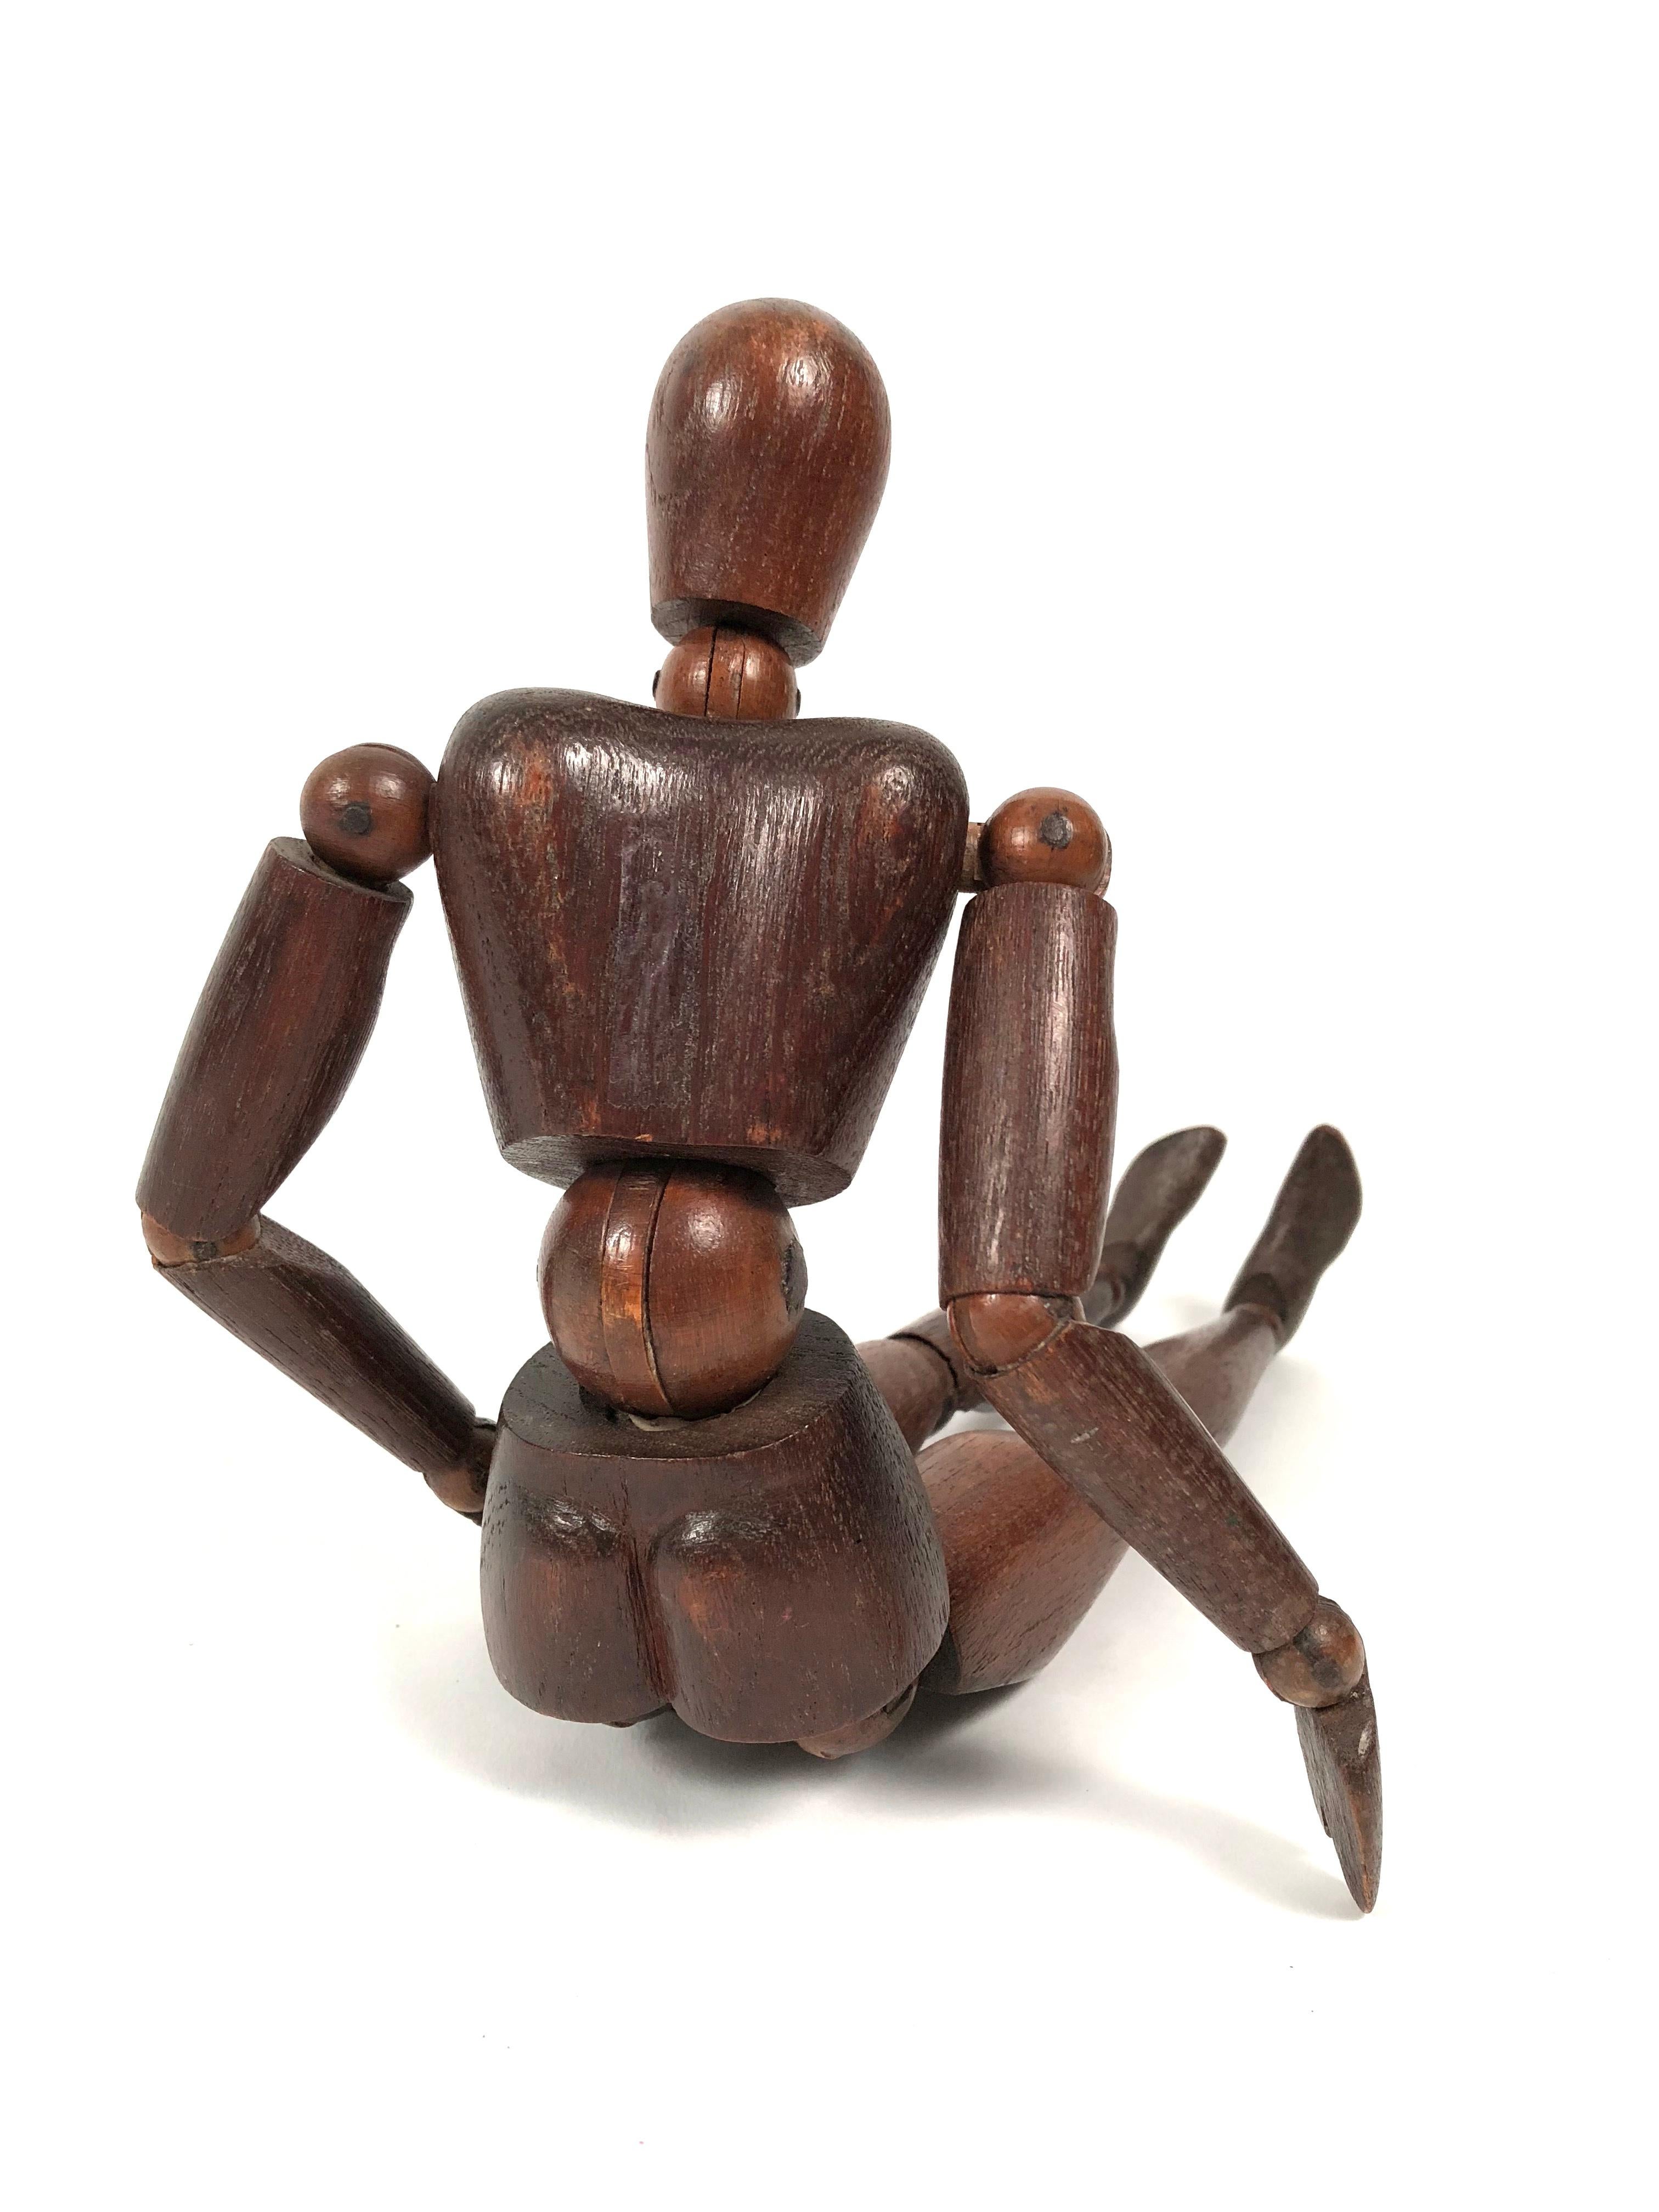 Antique Carved Walnut Articulated Artist's Figure Model 2